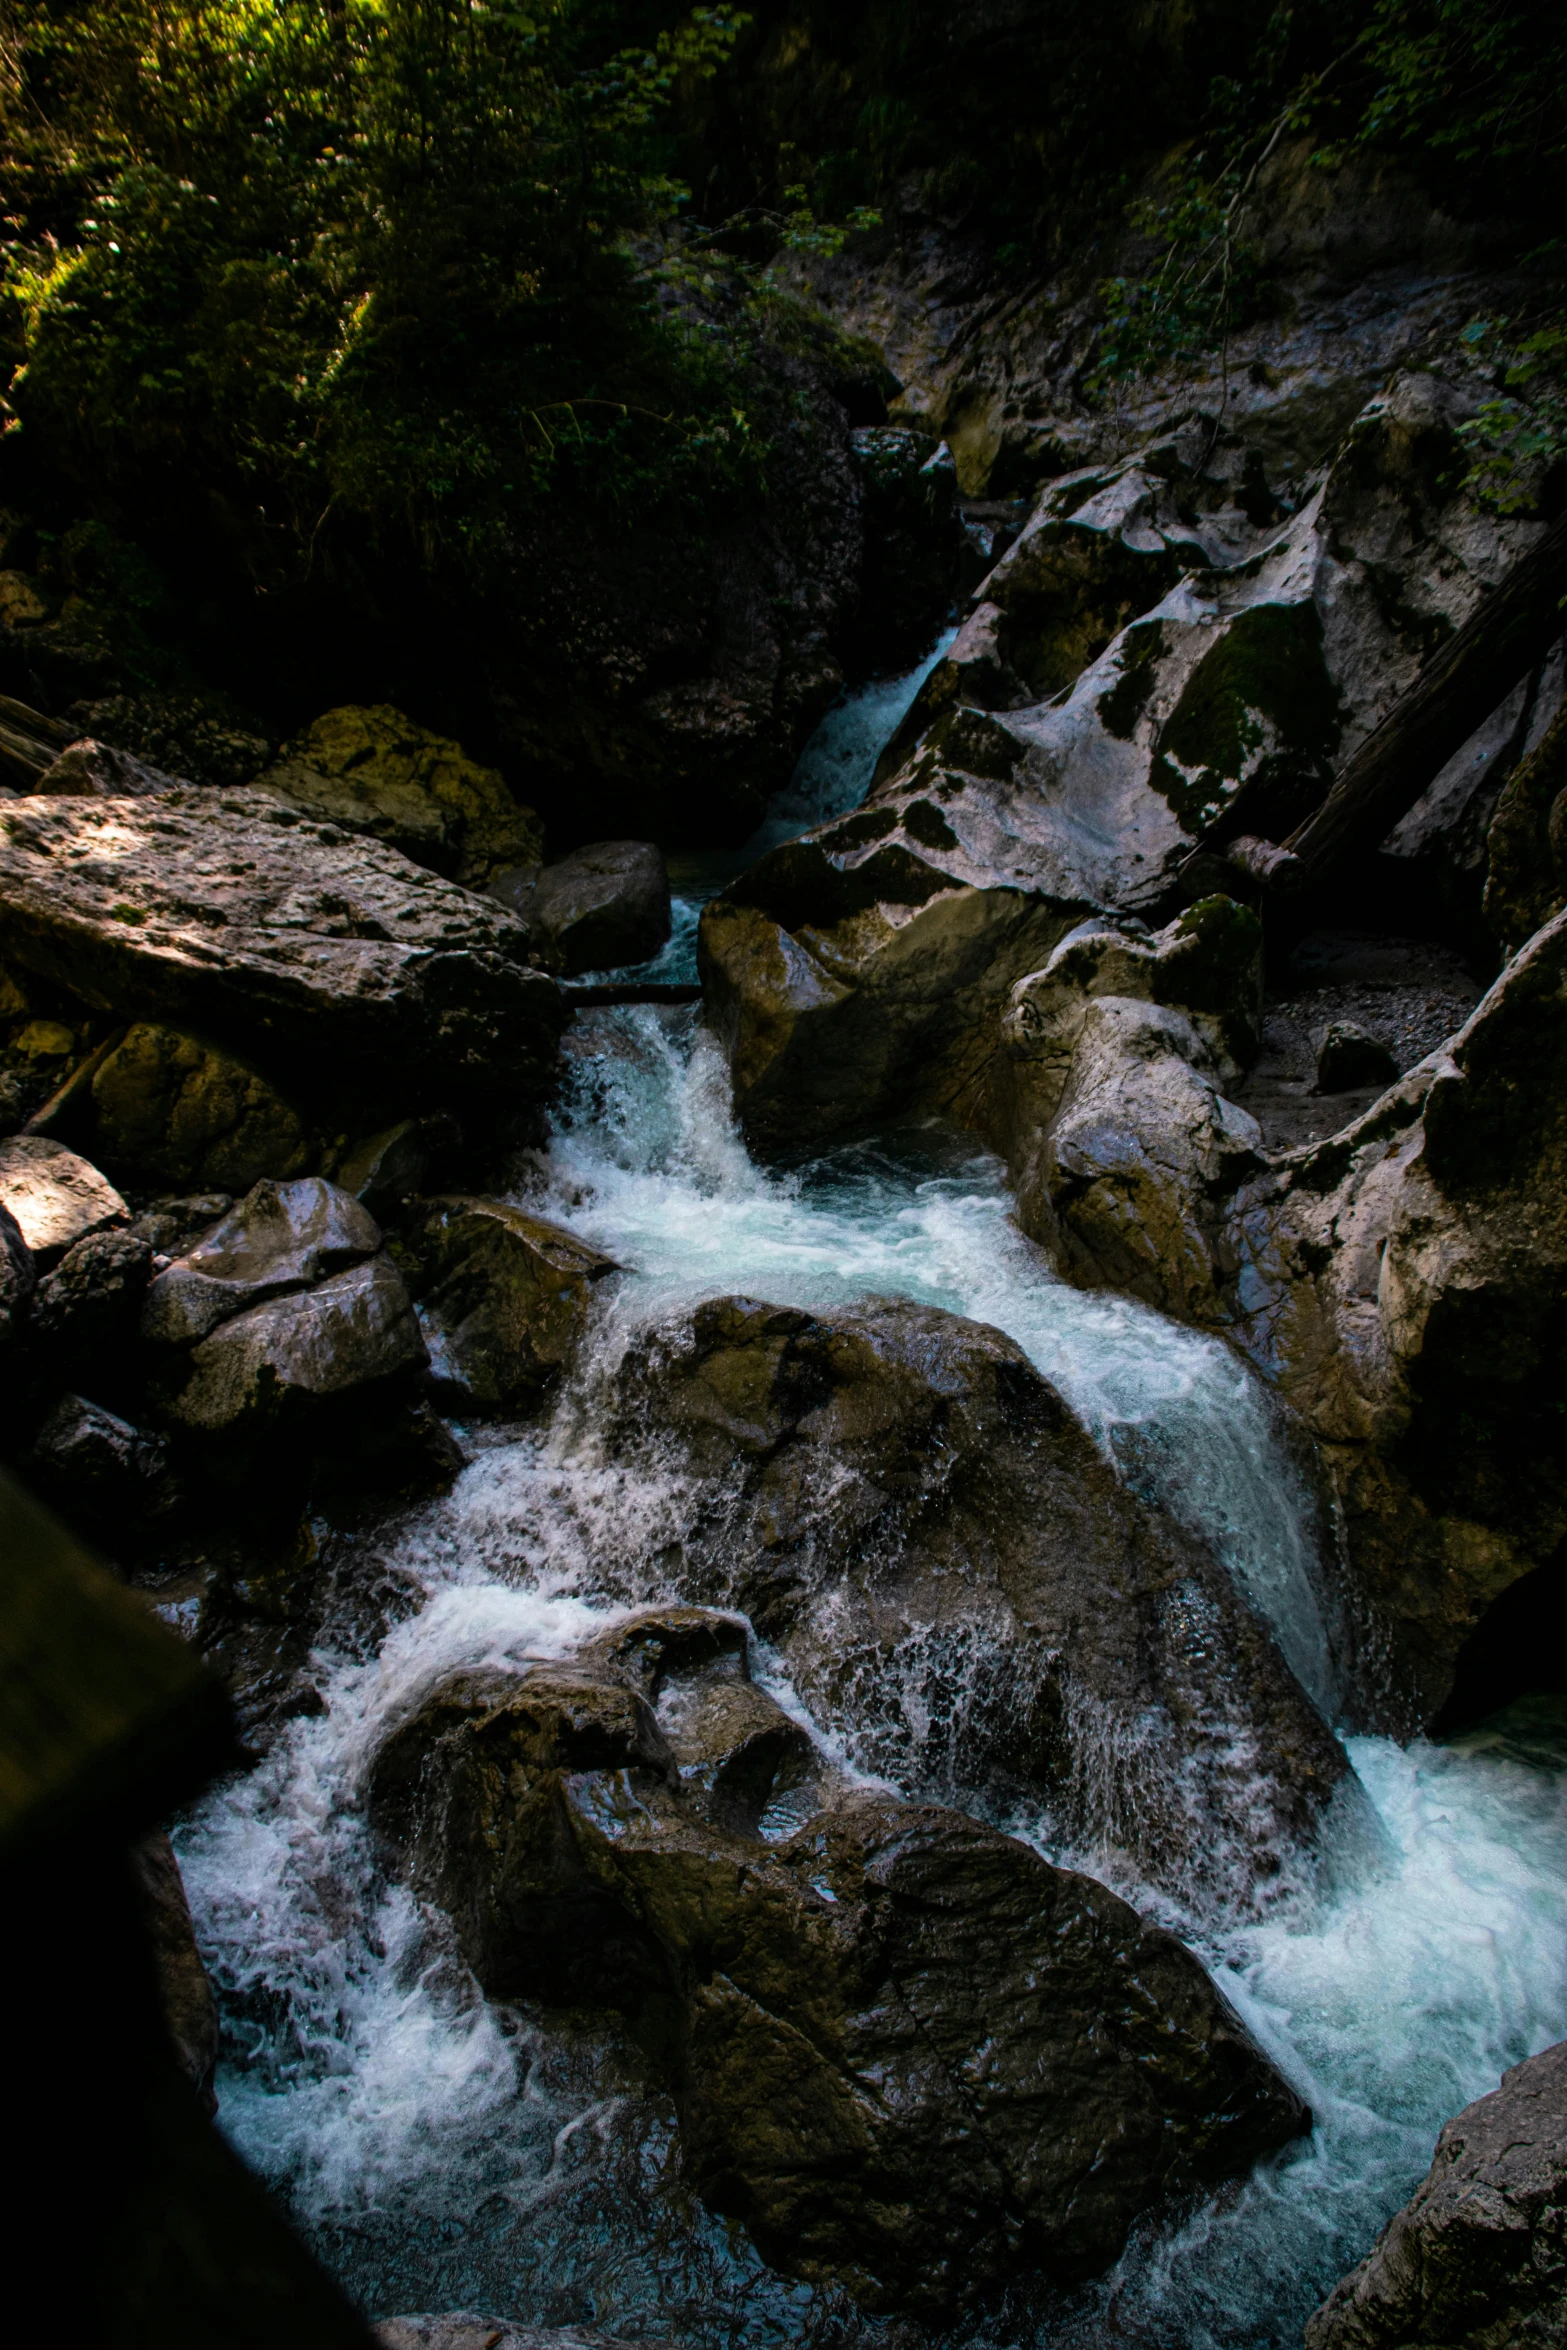 a river runs through the trees as it goes through the rocks